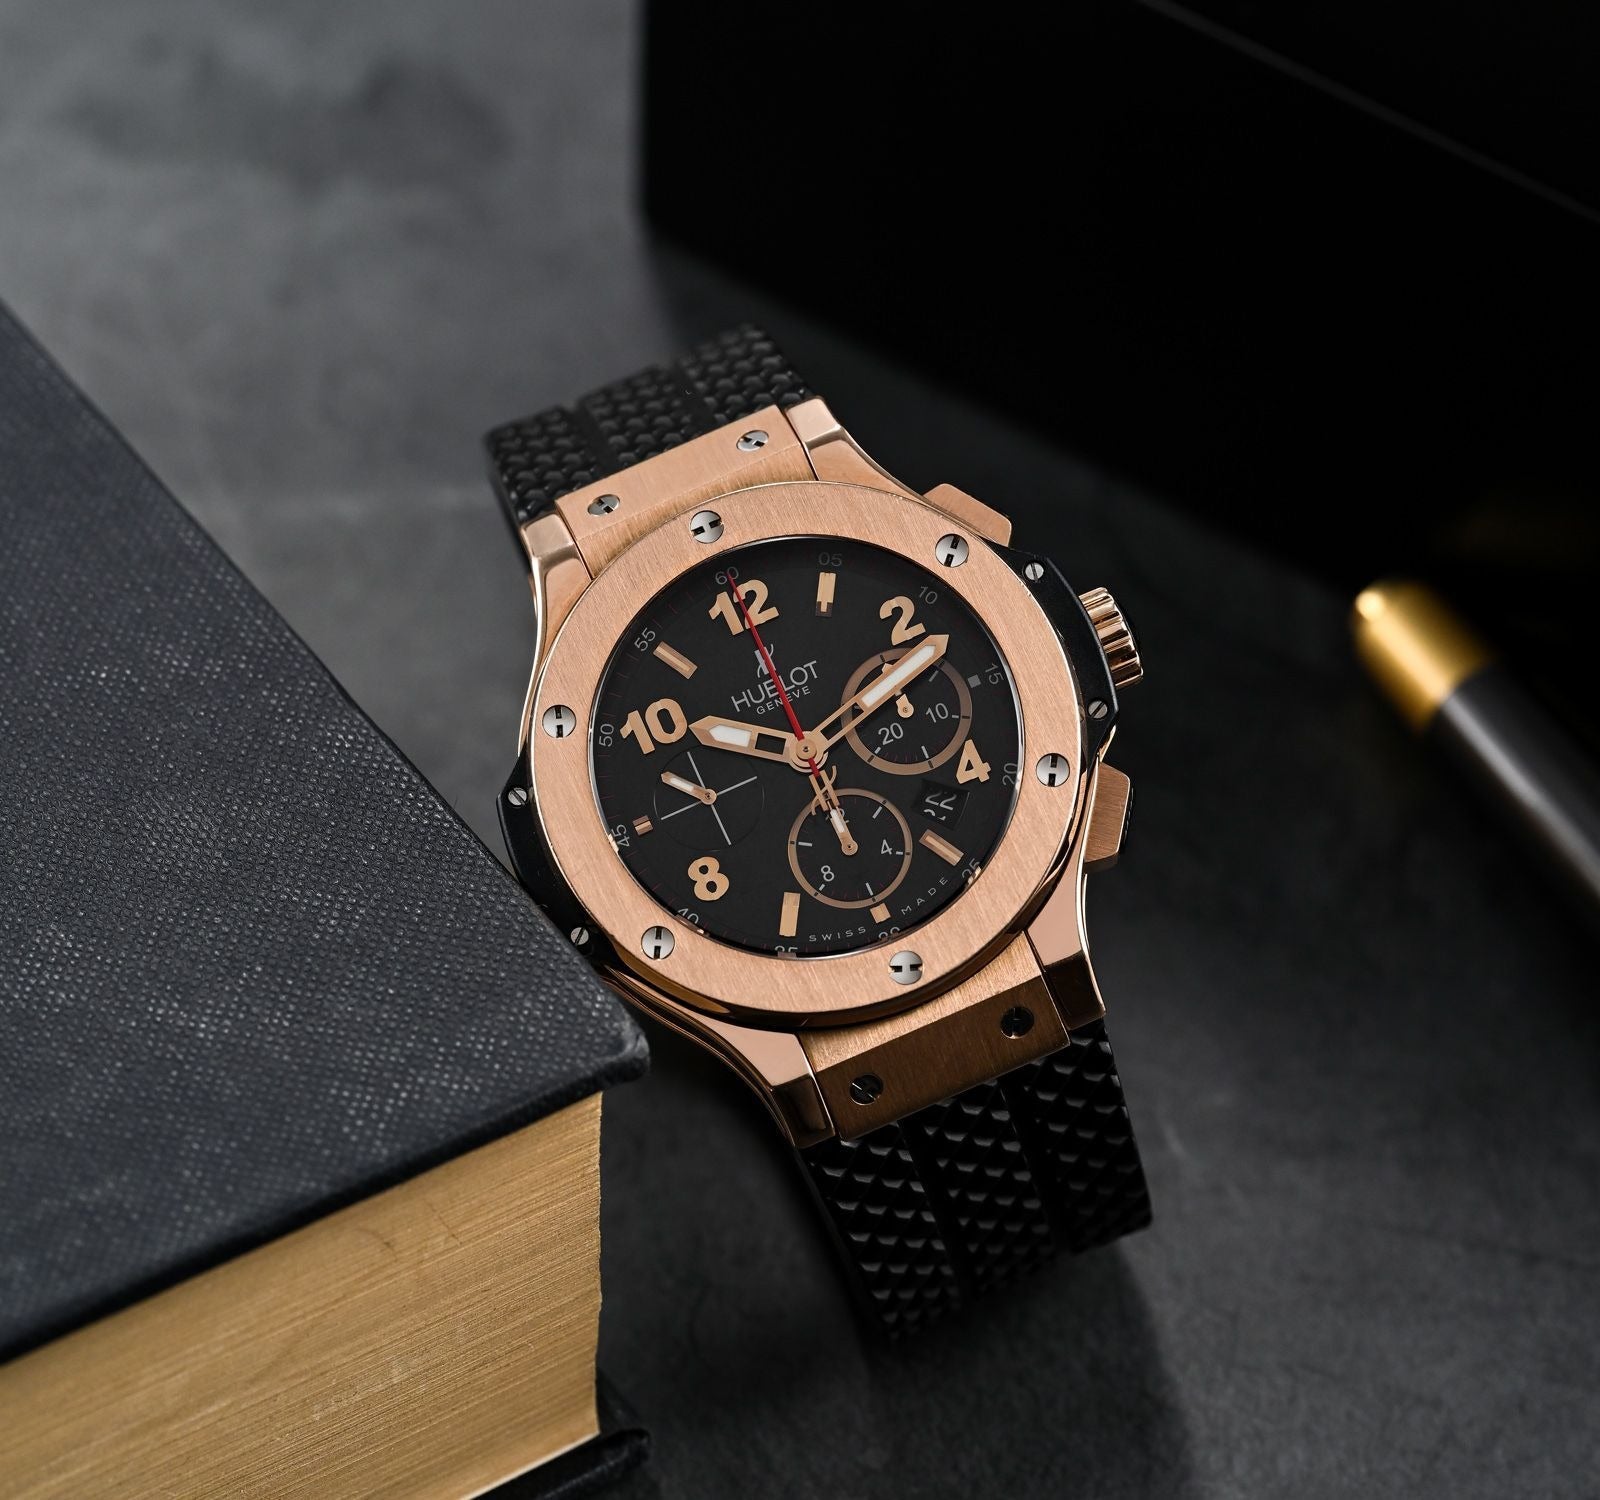 Hublot Big Bang E Gen 3 Luxury Smartwatch With Wear OS 3 Launched -  Gizmochina